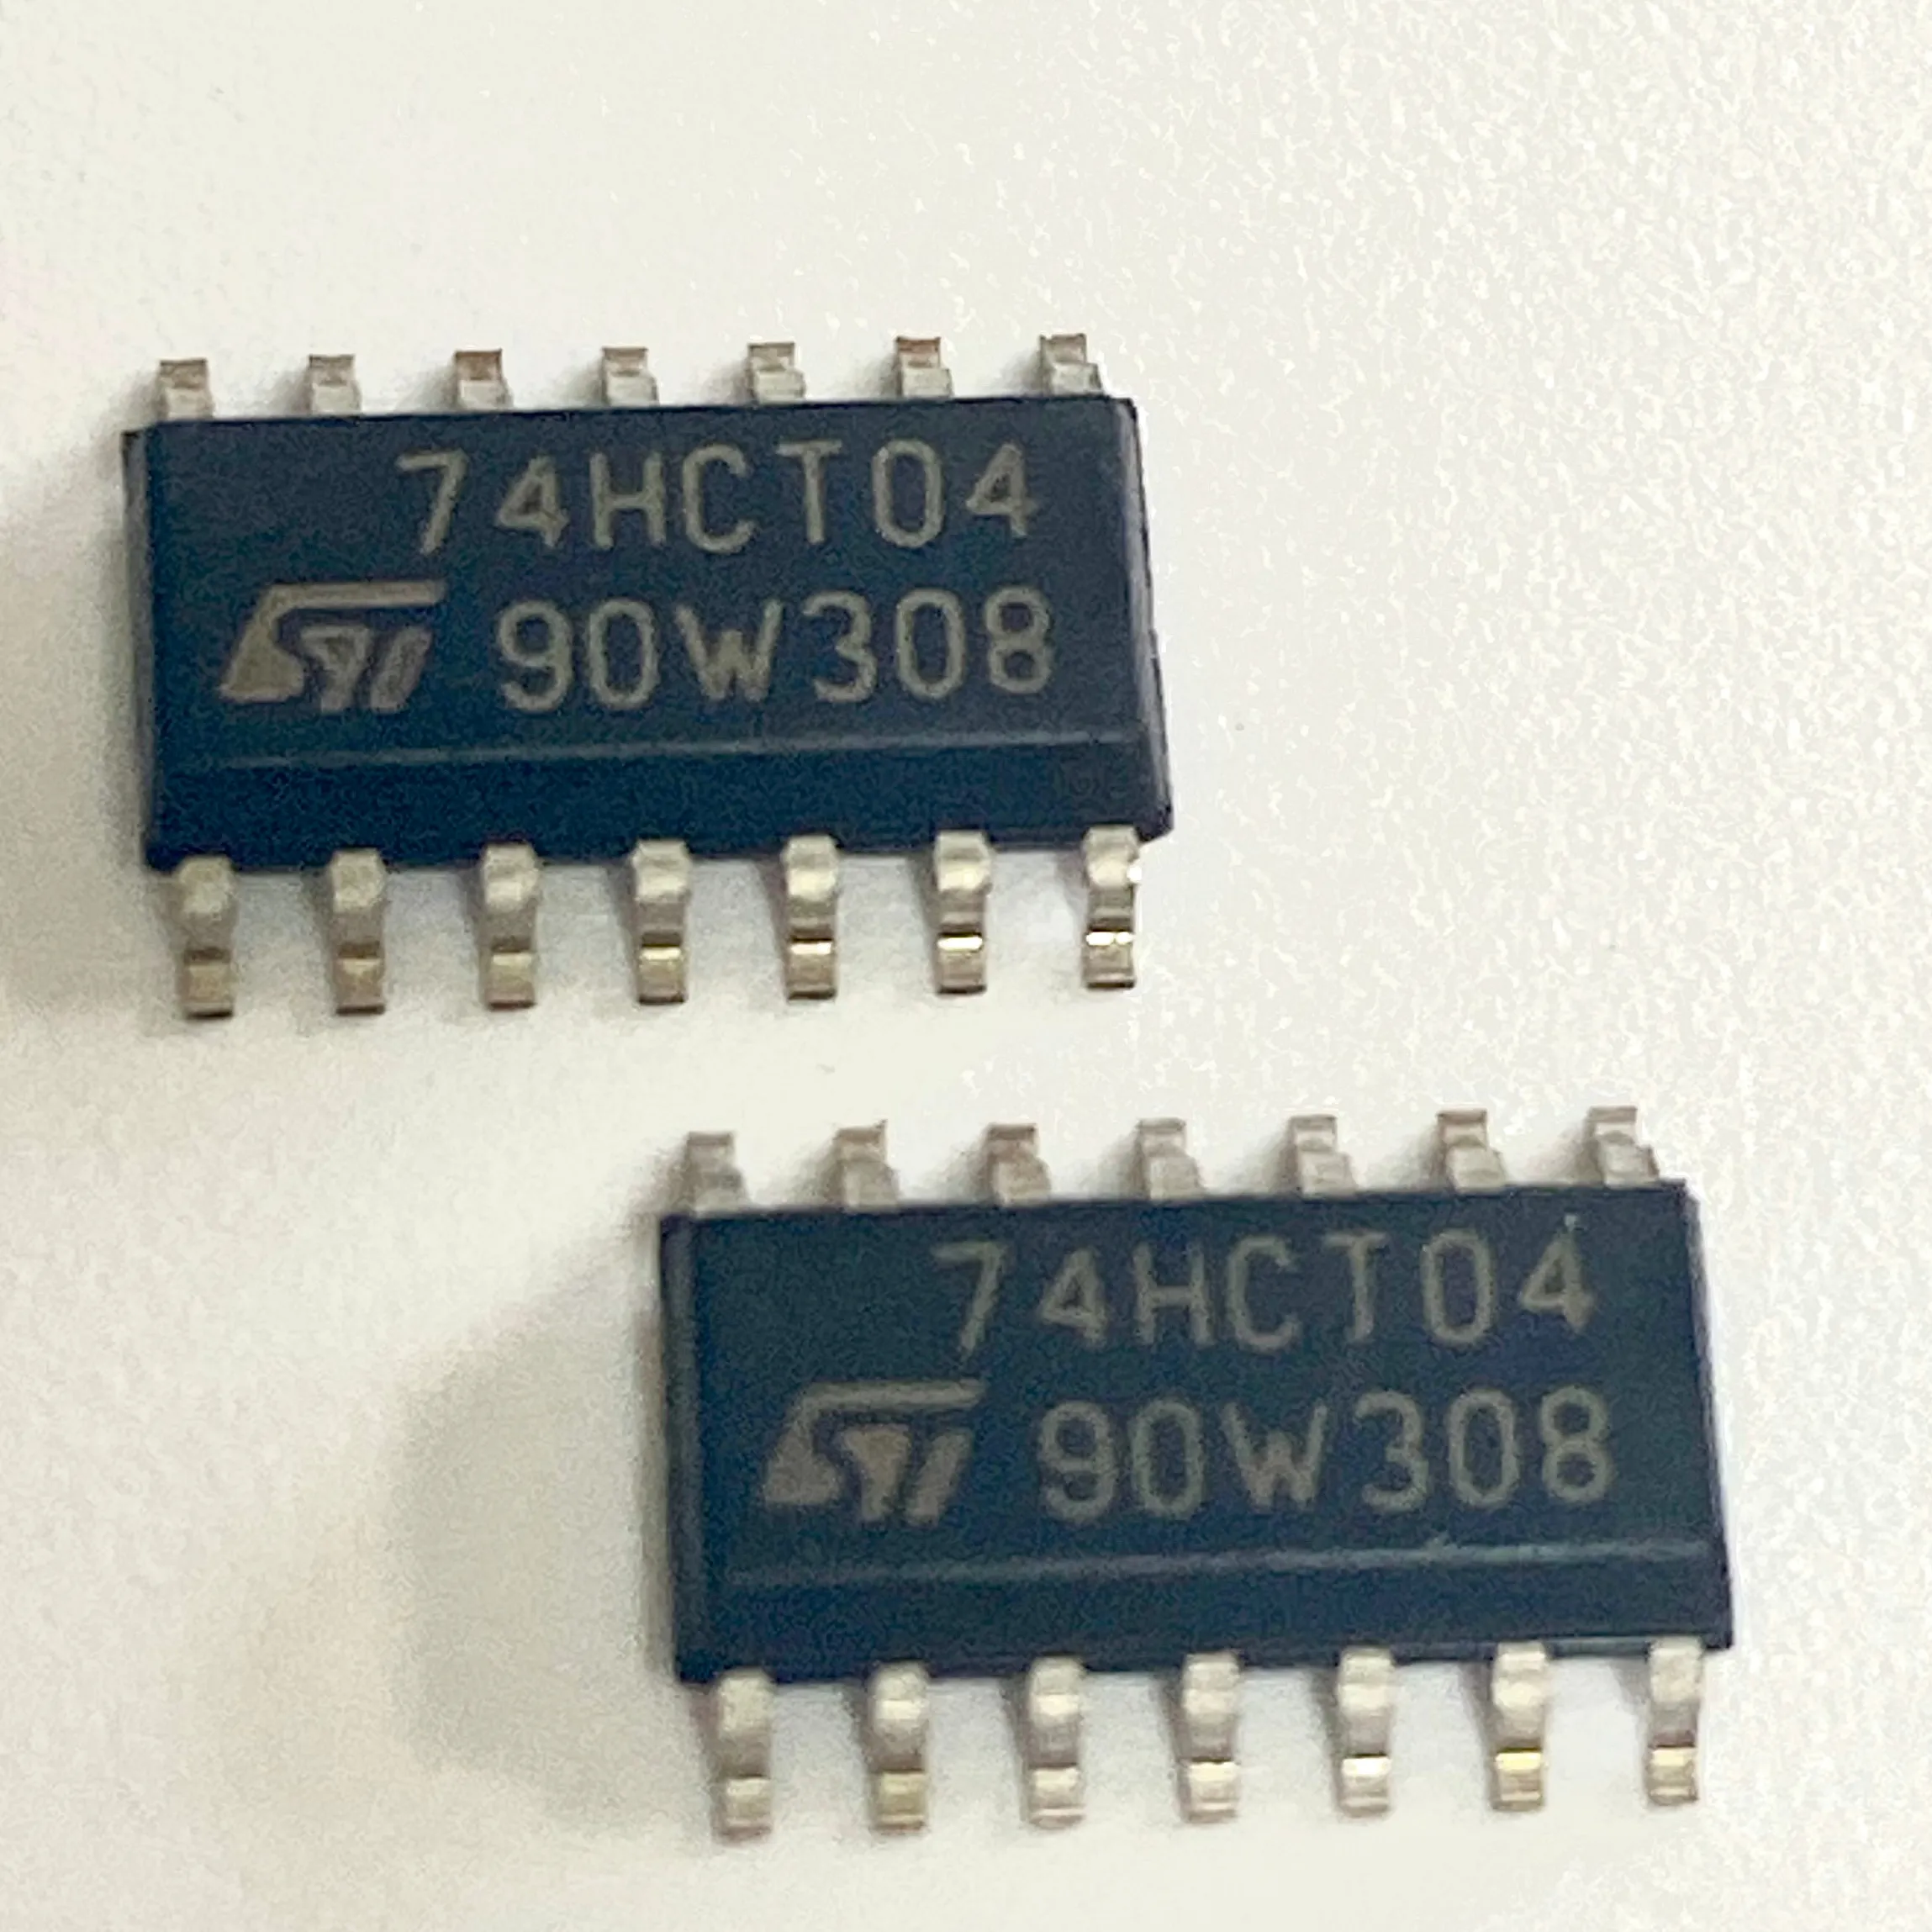 Baru Tiba Komponen SOIC-14 Sebagai Komponen Elektronik Inverter SMD M74HCT04M1R